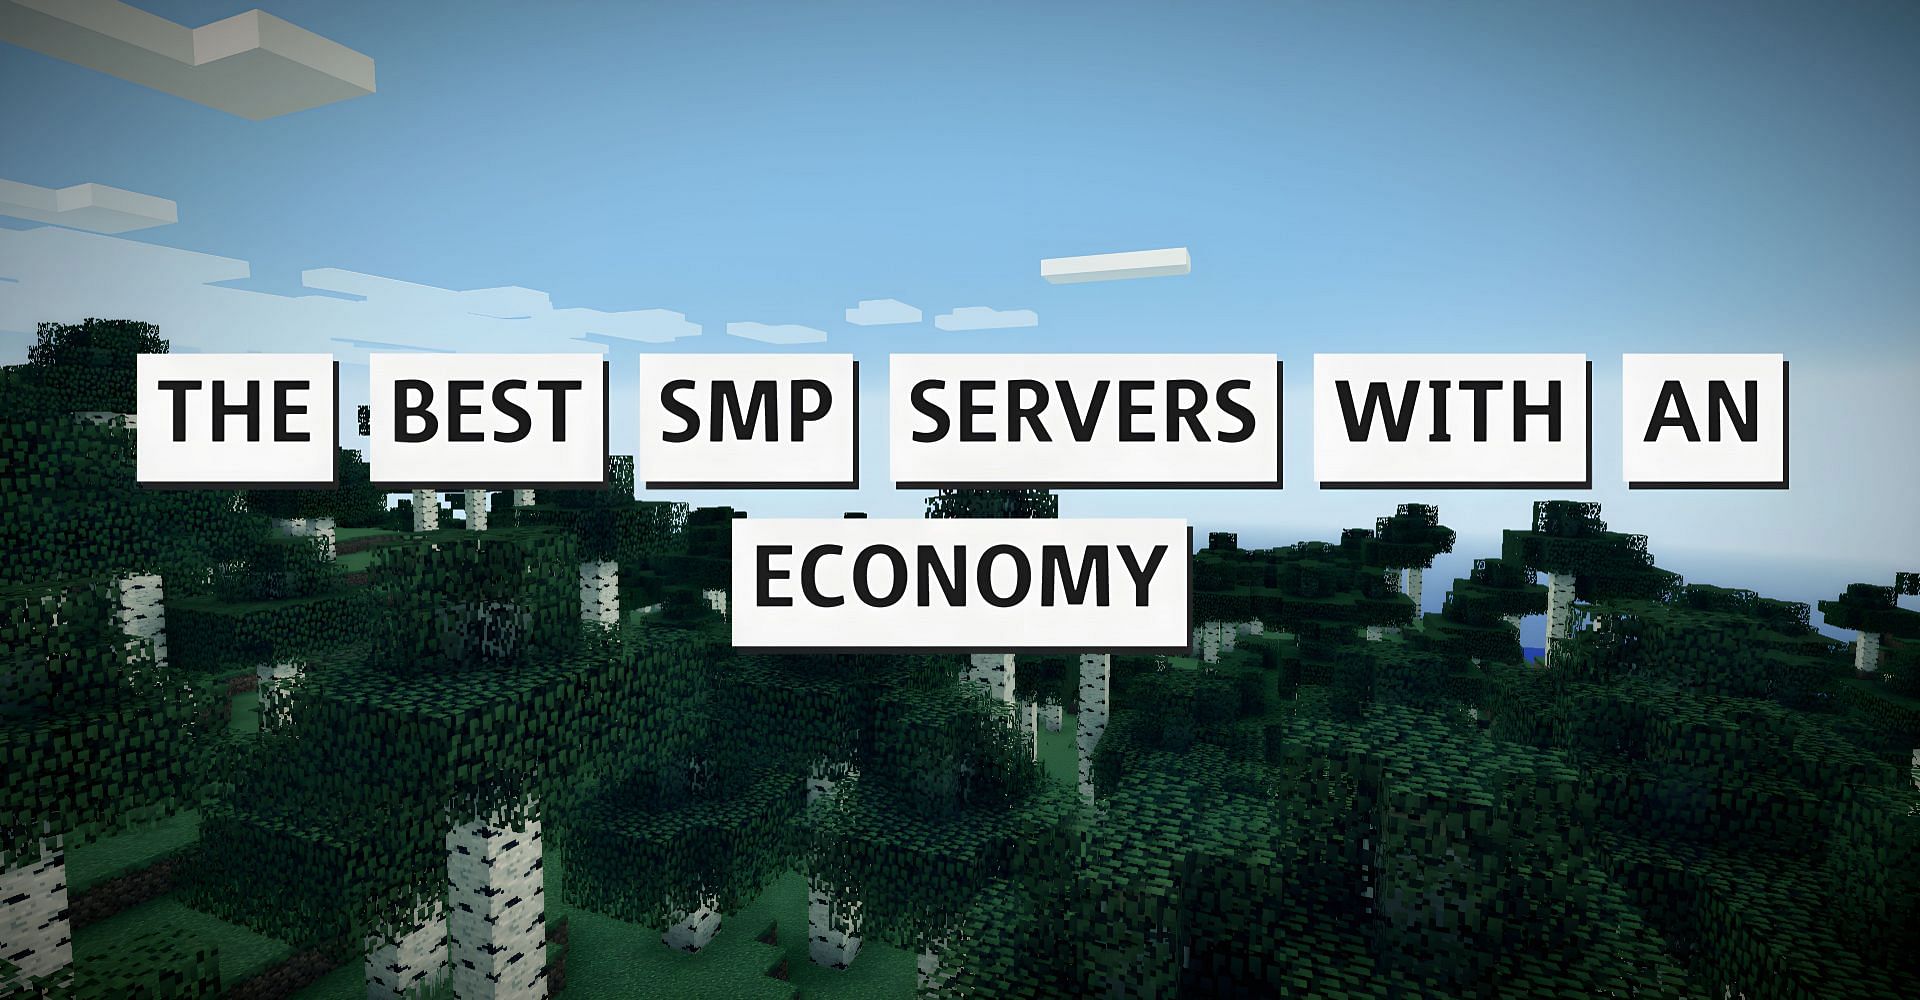 Legend smp - Minecraft server